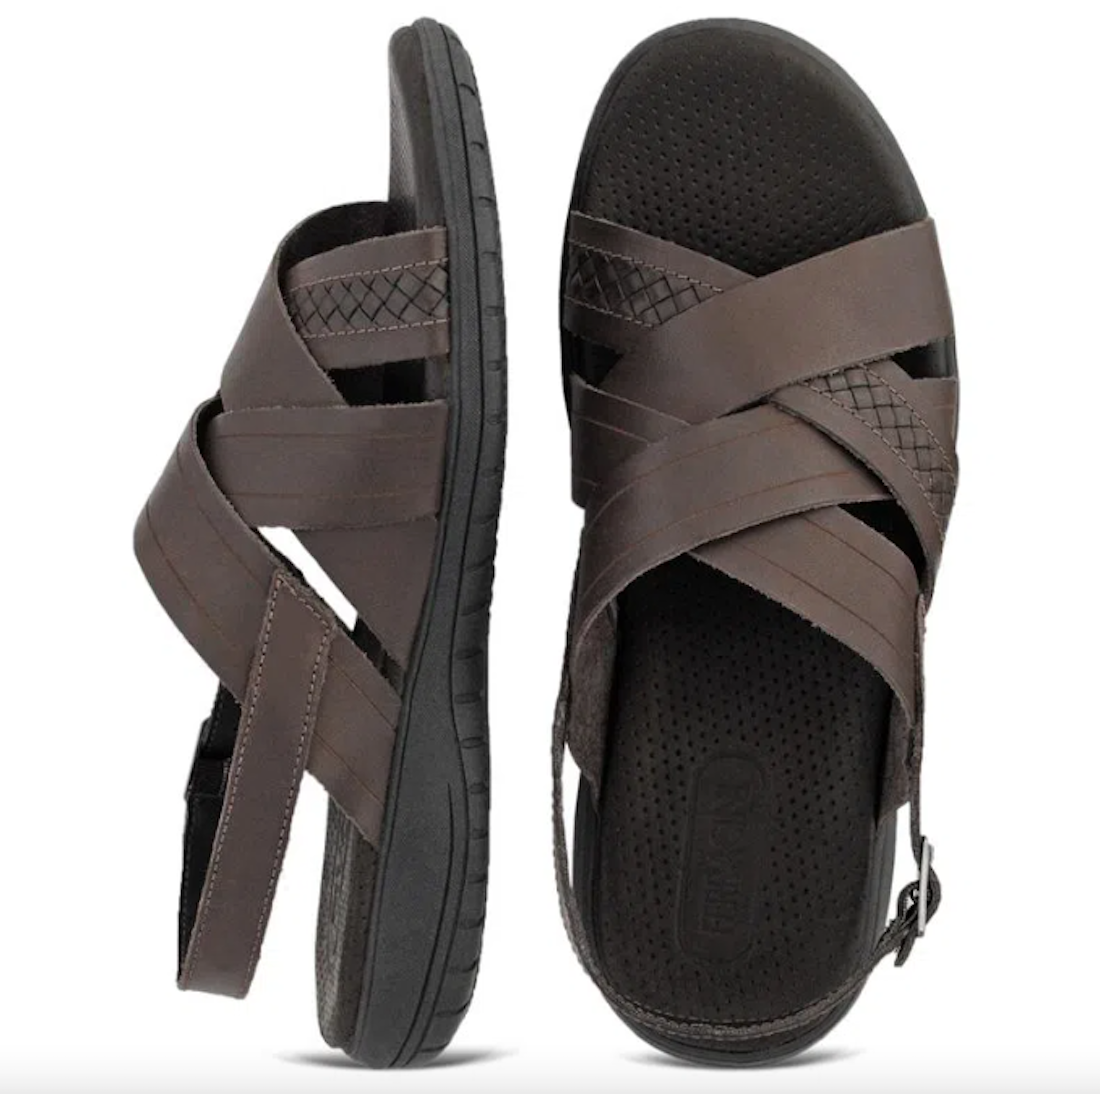 Ferracini Lancer Men's Leather Sandals 1207